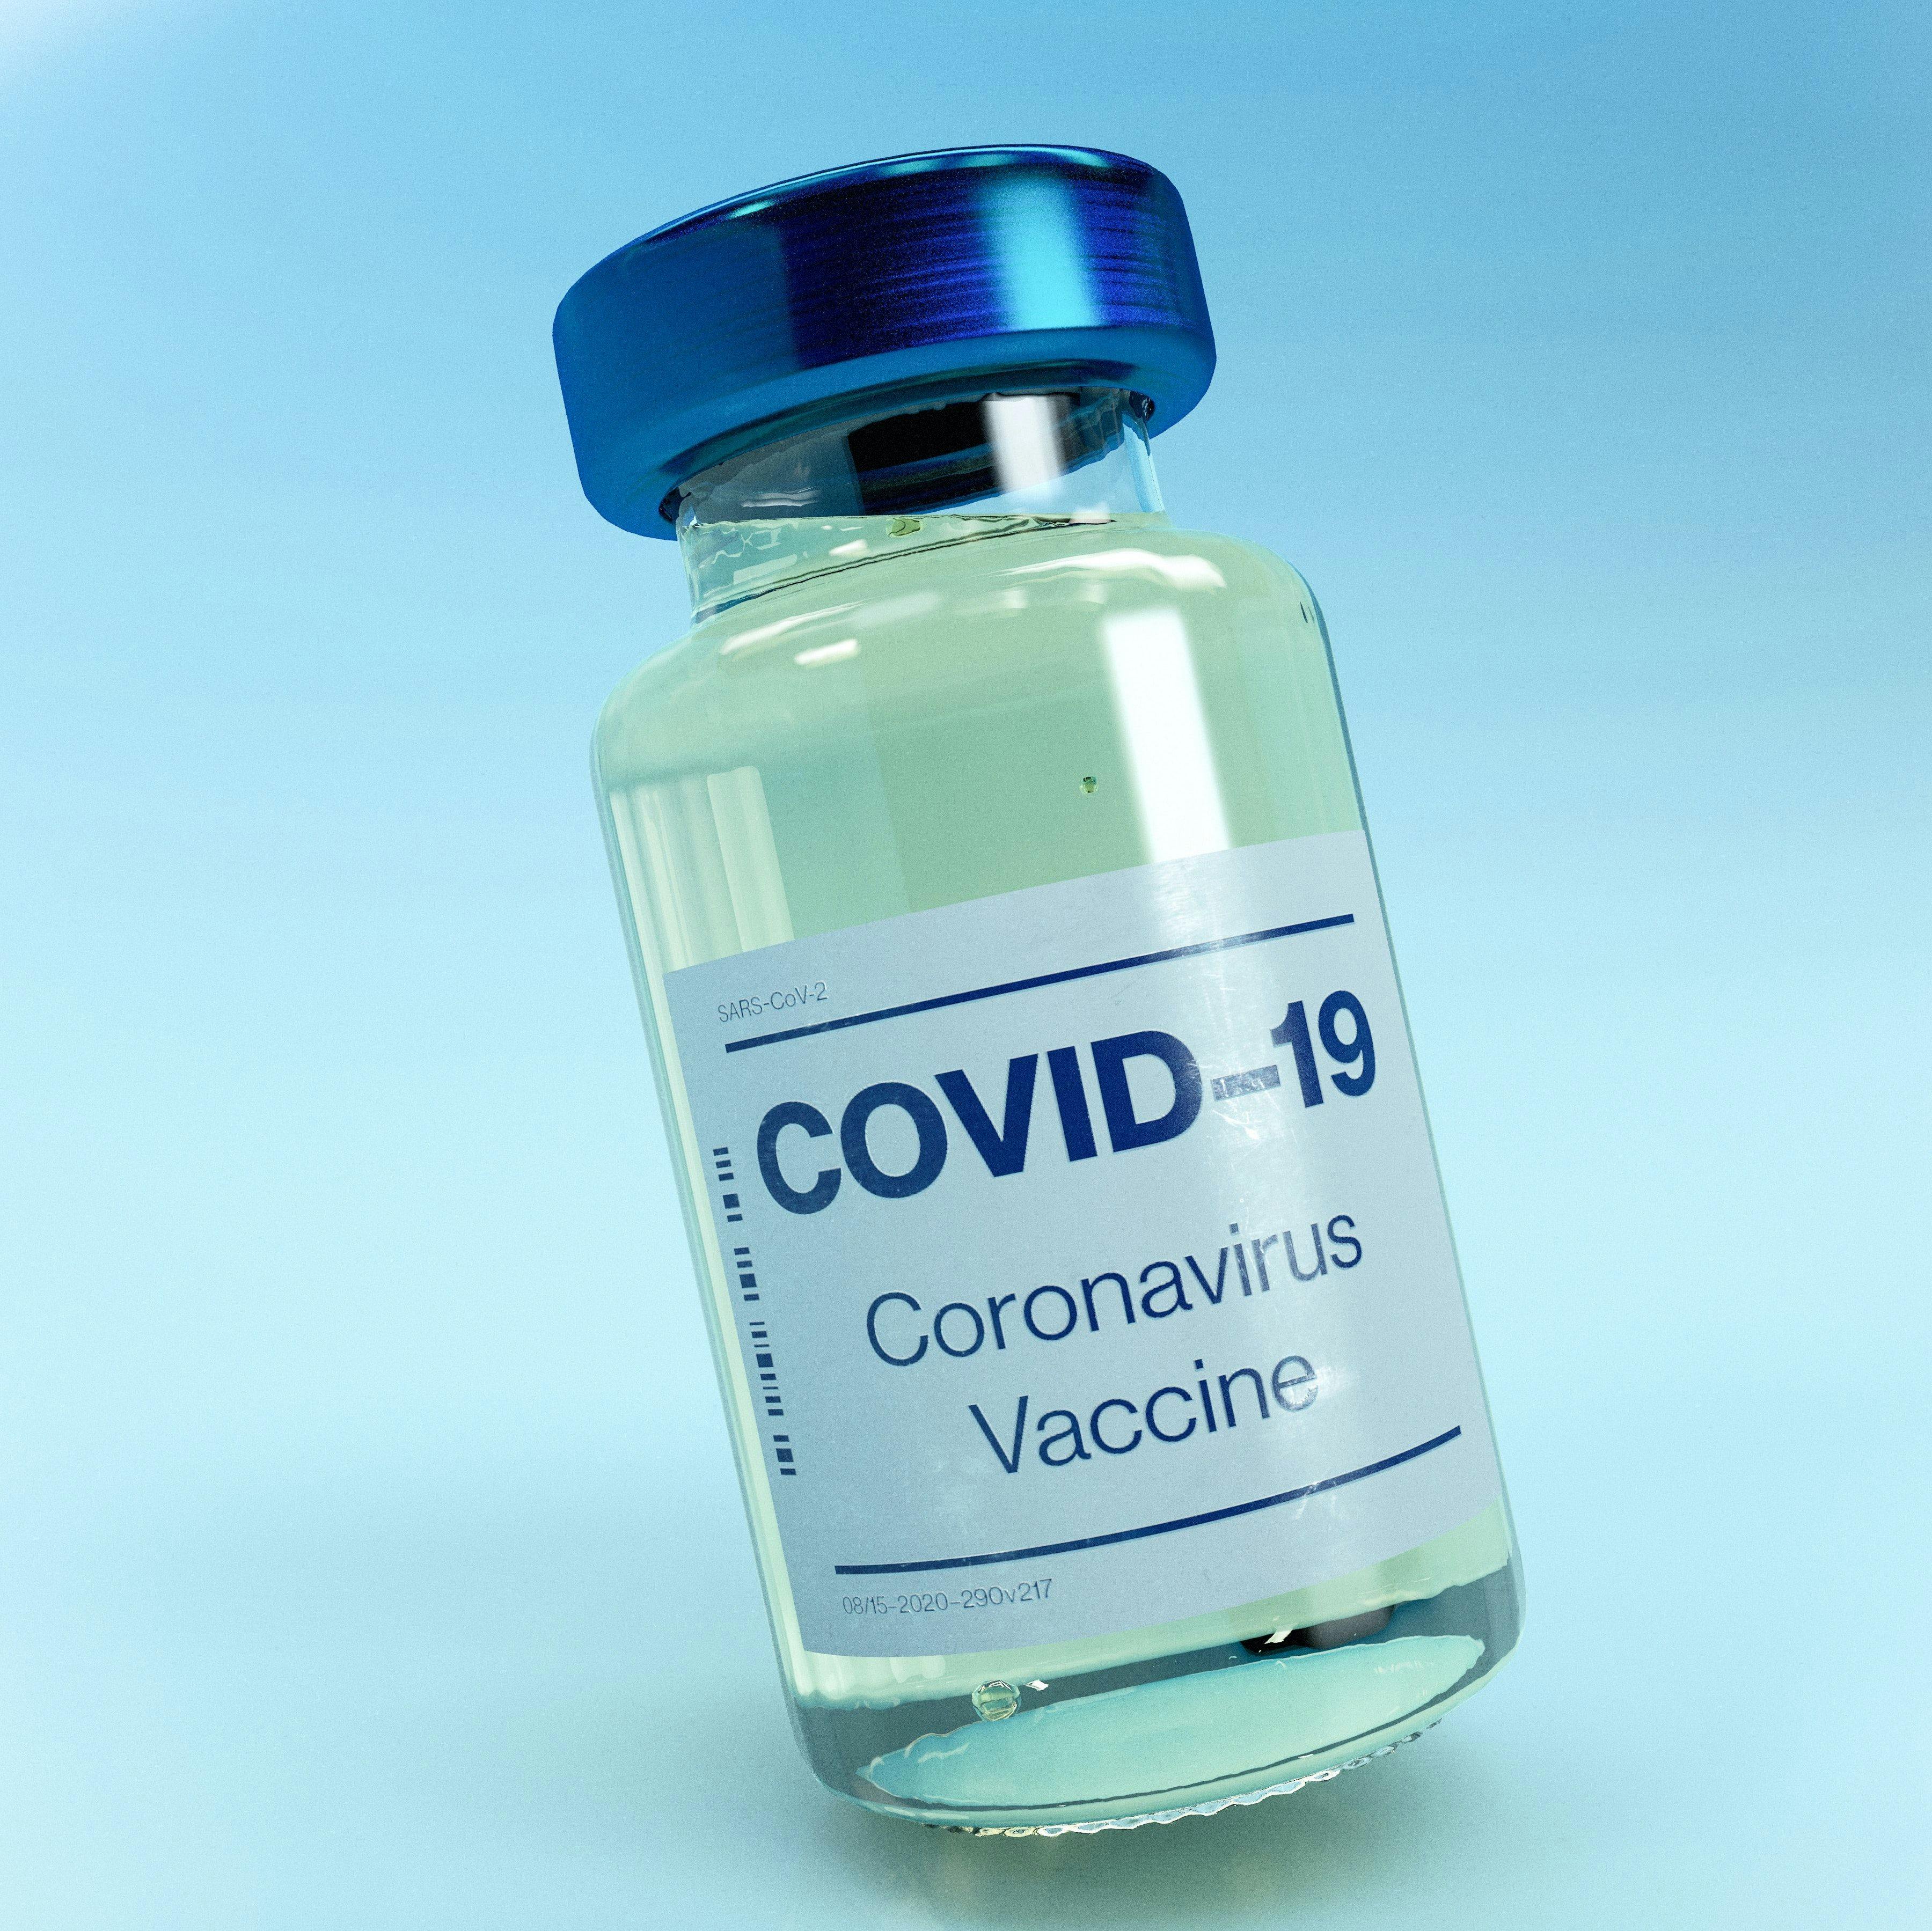 Russia COVID-19 Vaccine Reports 91.6% Efficacy, Prevention of Severe Disease